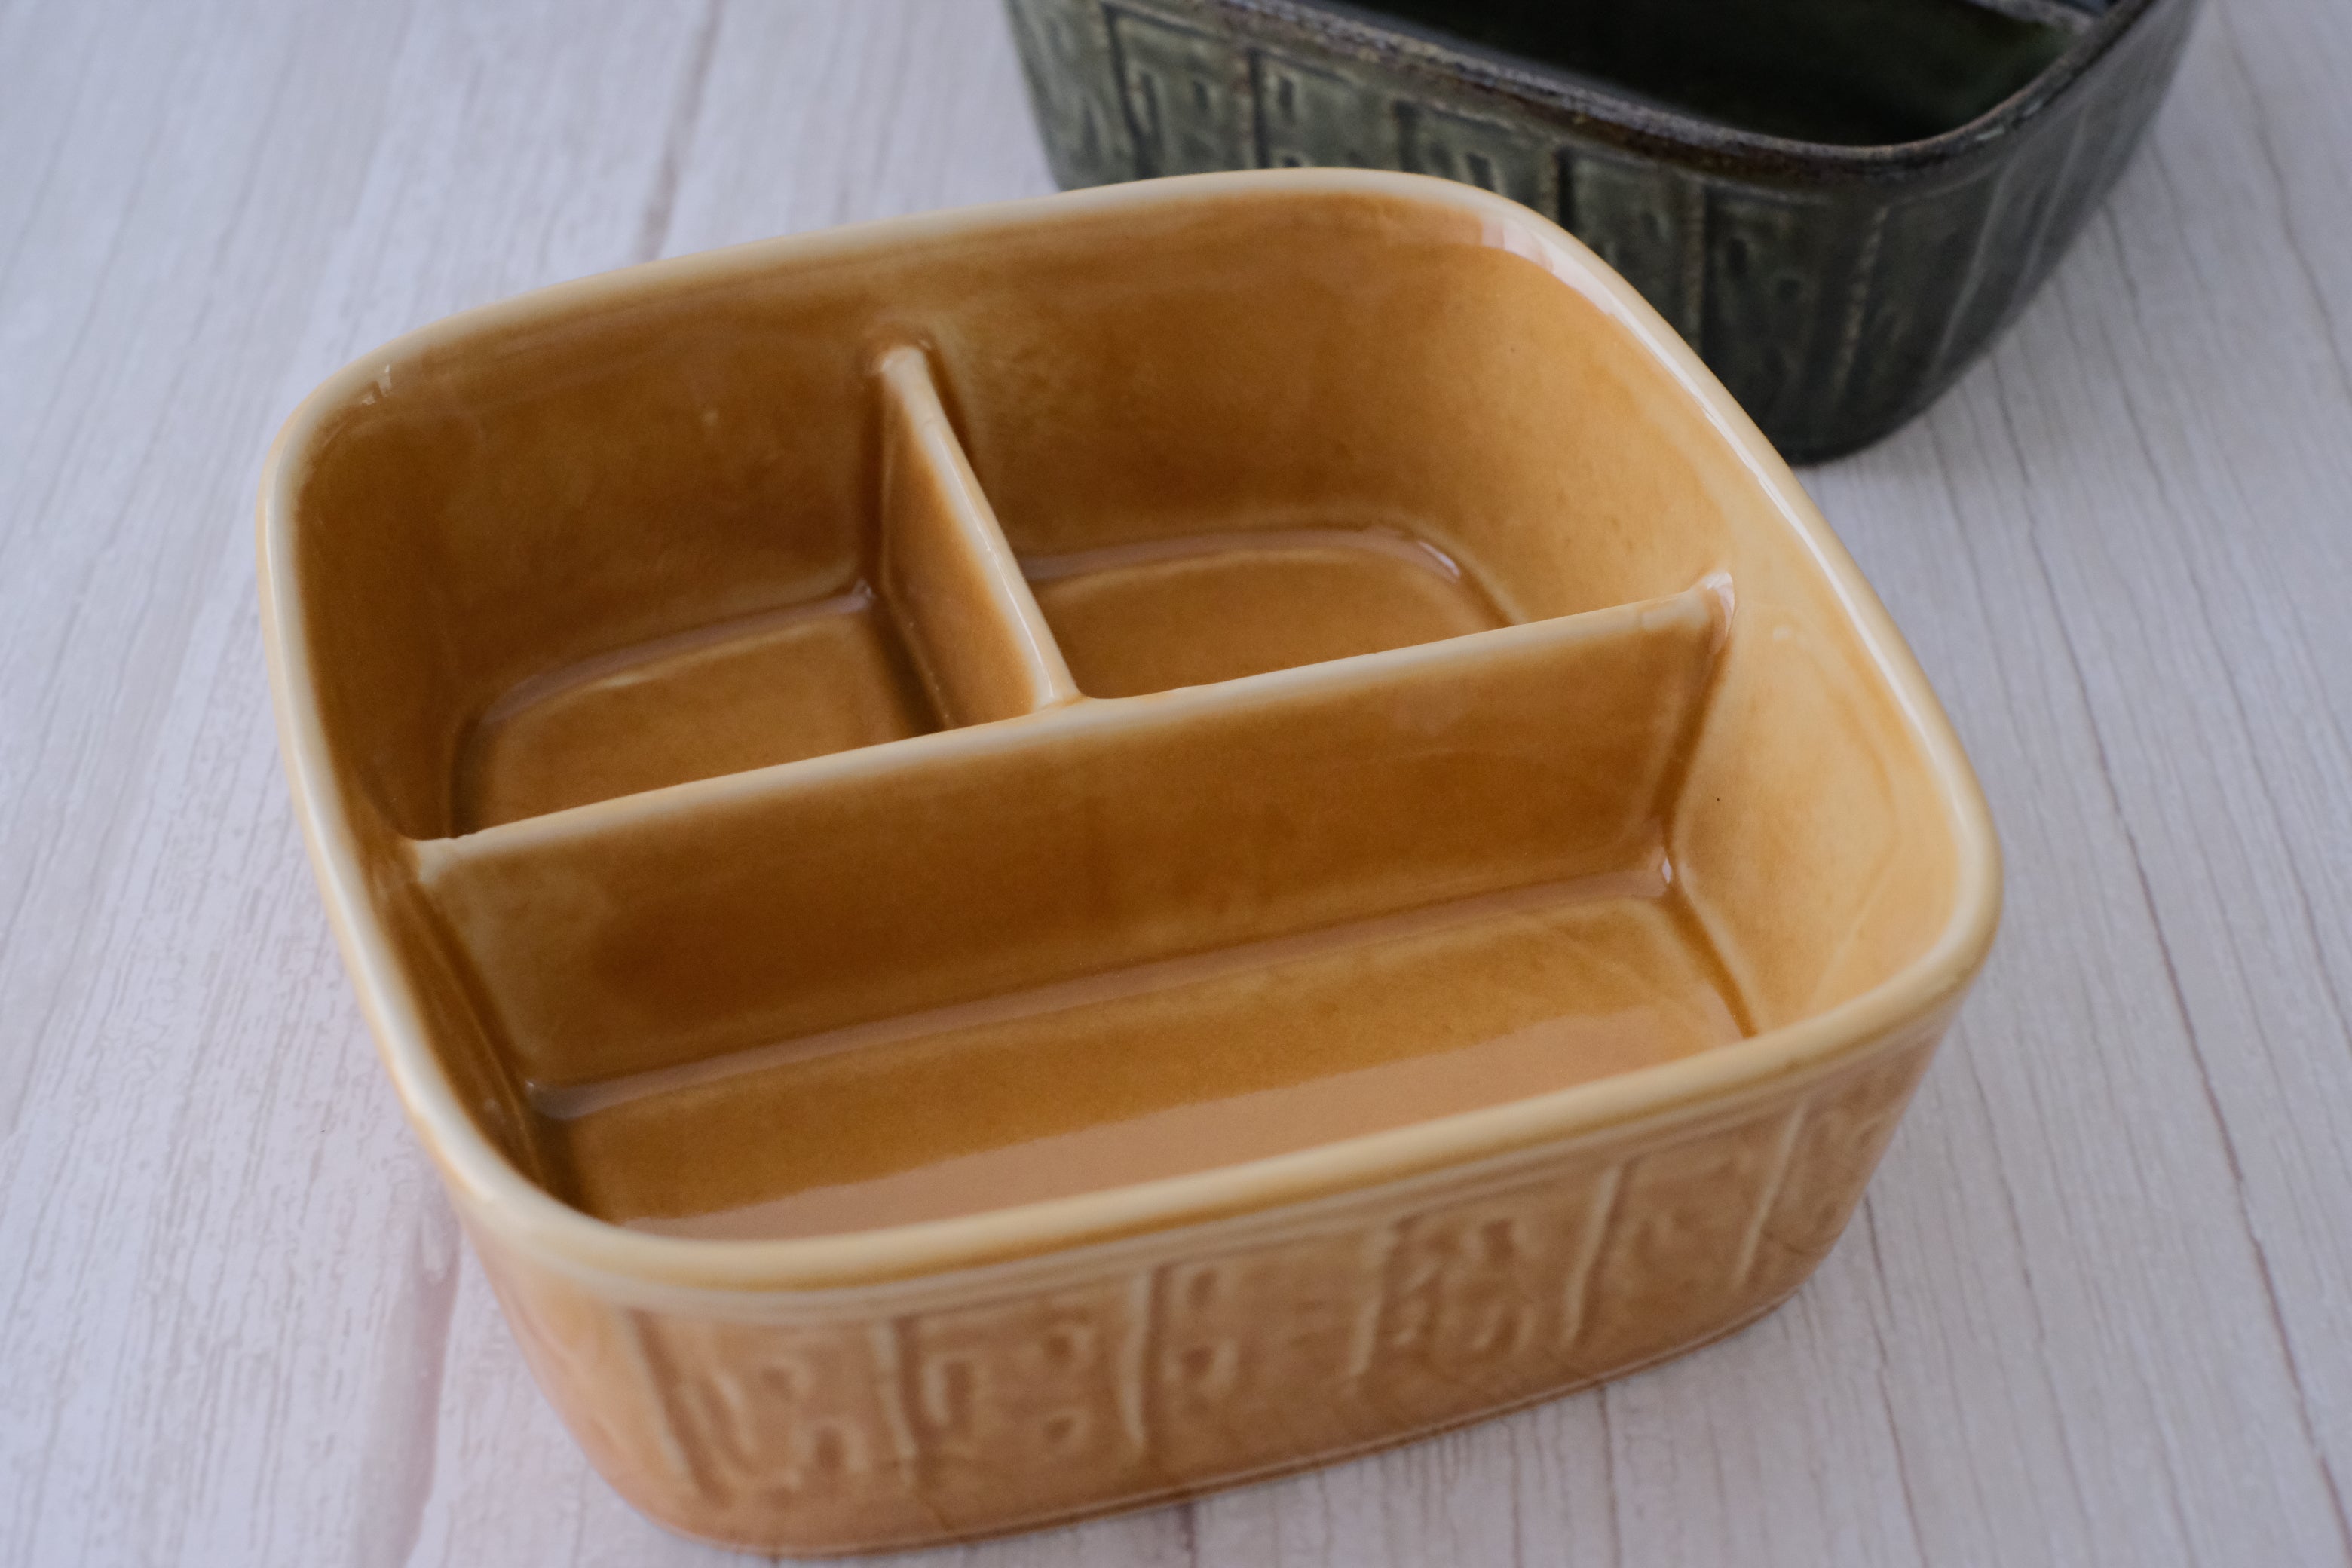 Satto Partitioned Ceramic Bento Food Storage Bowl